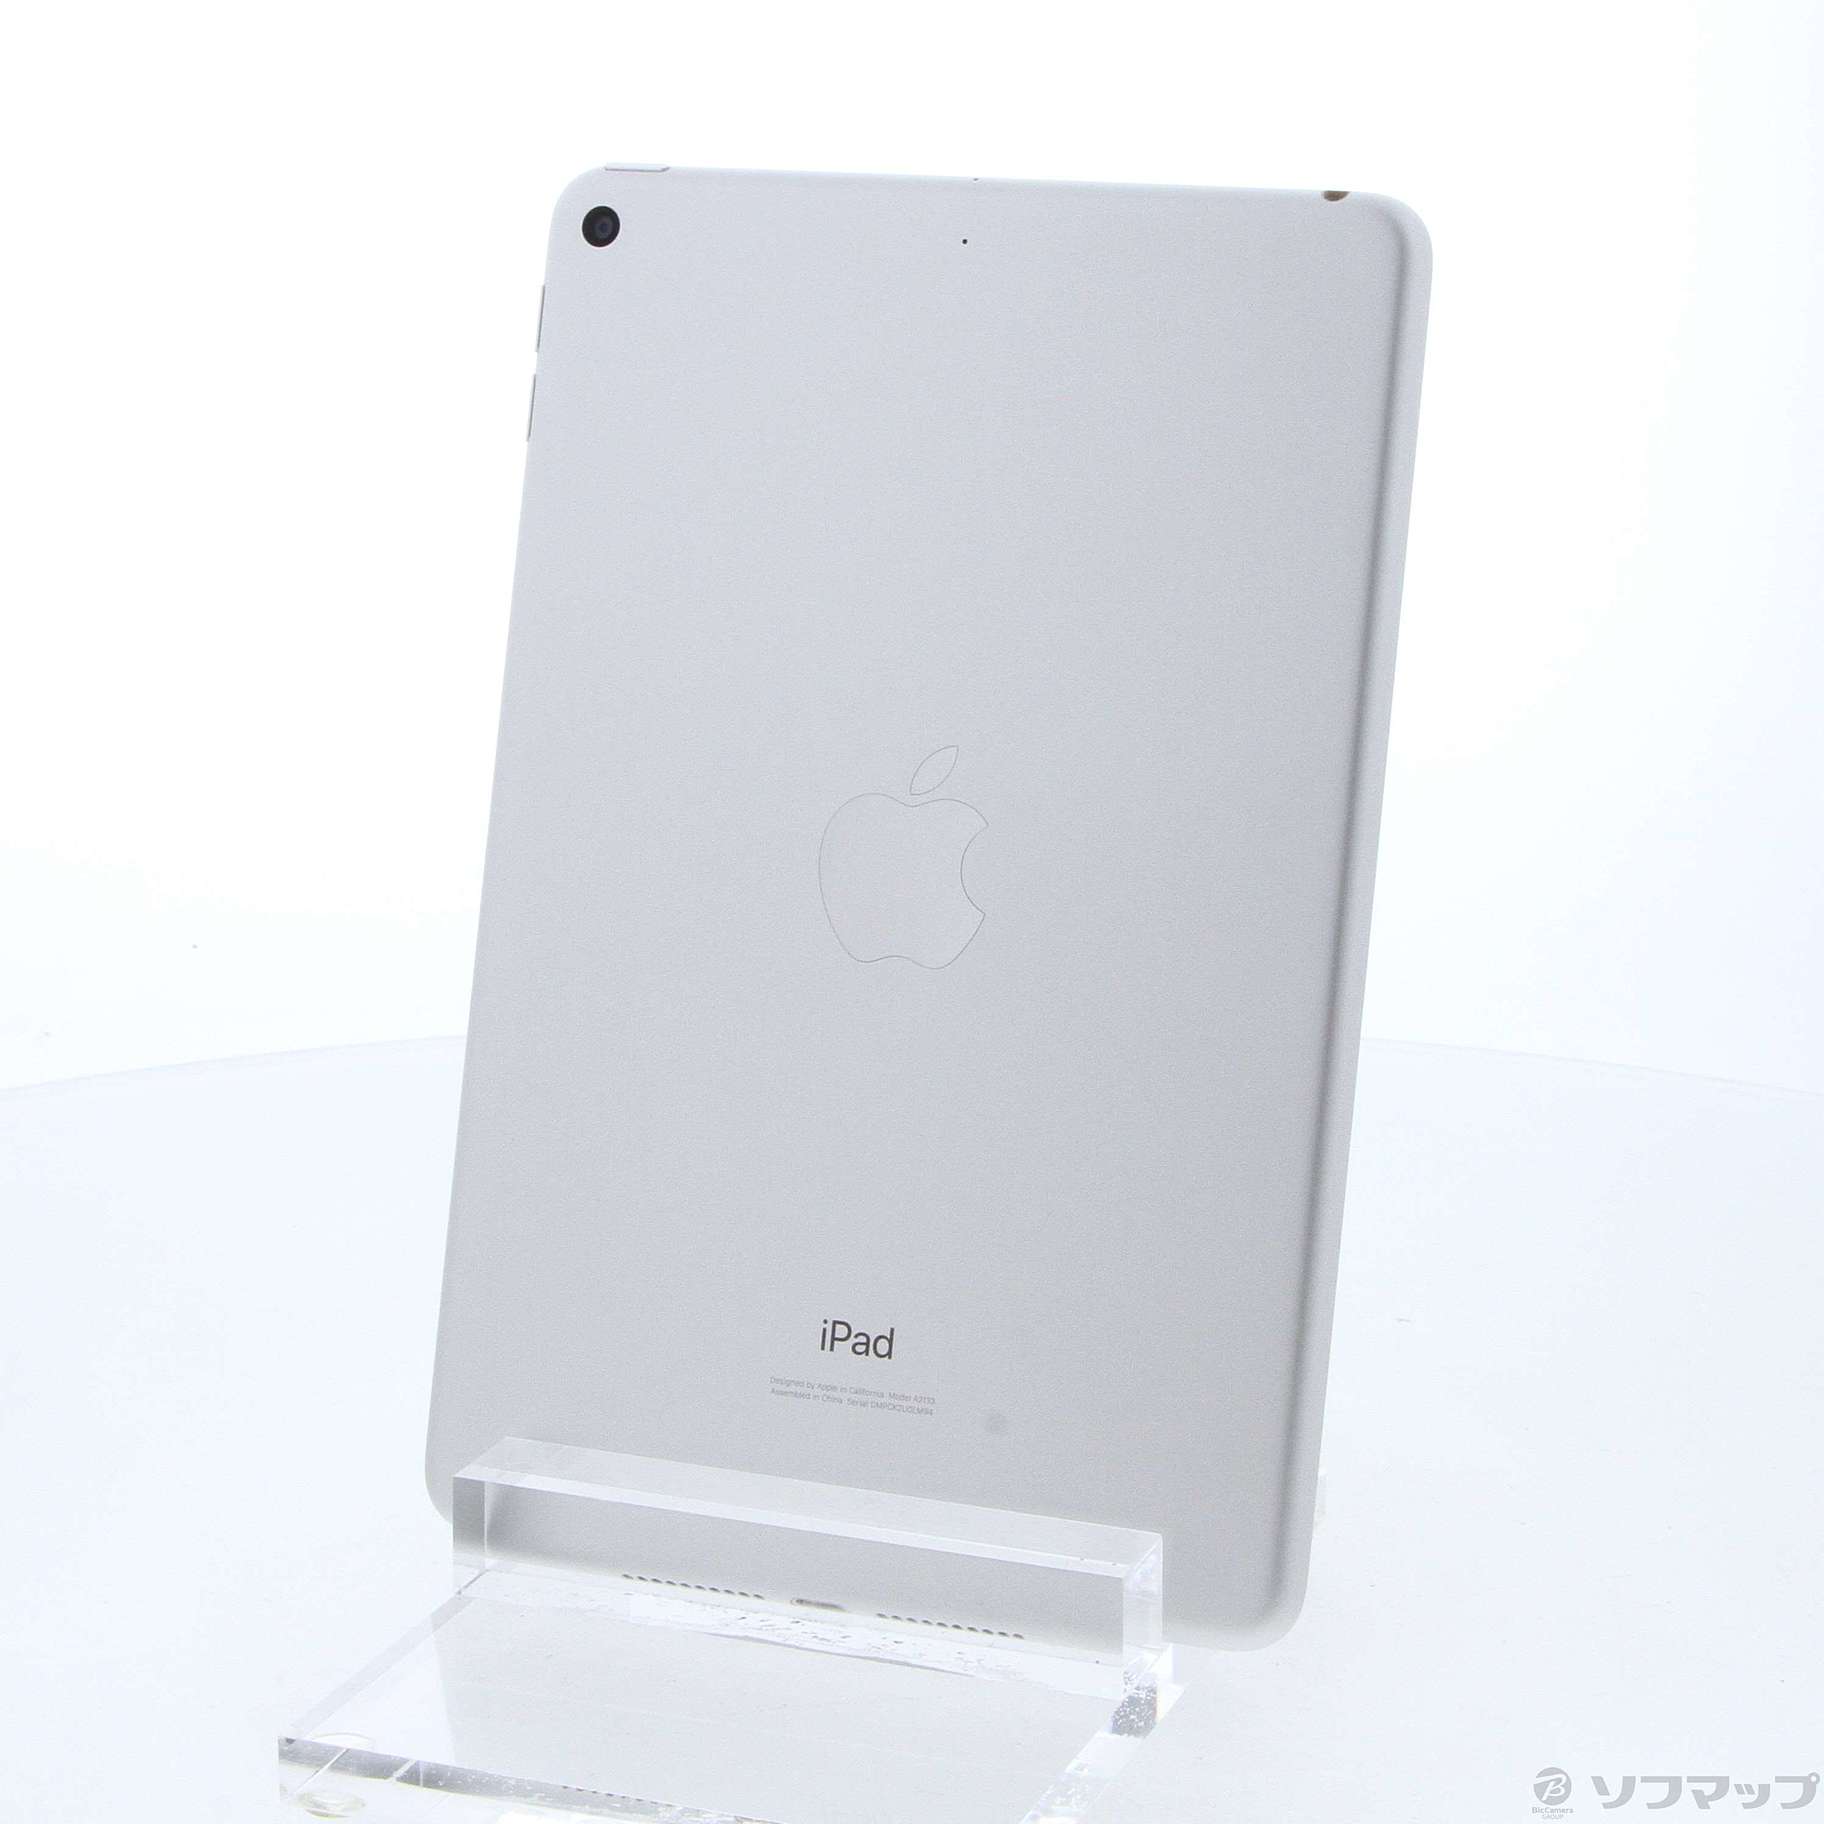 iPad mini a2133 wifiモデル、64GB ホワイト